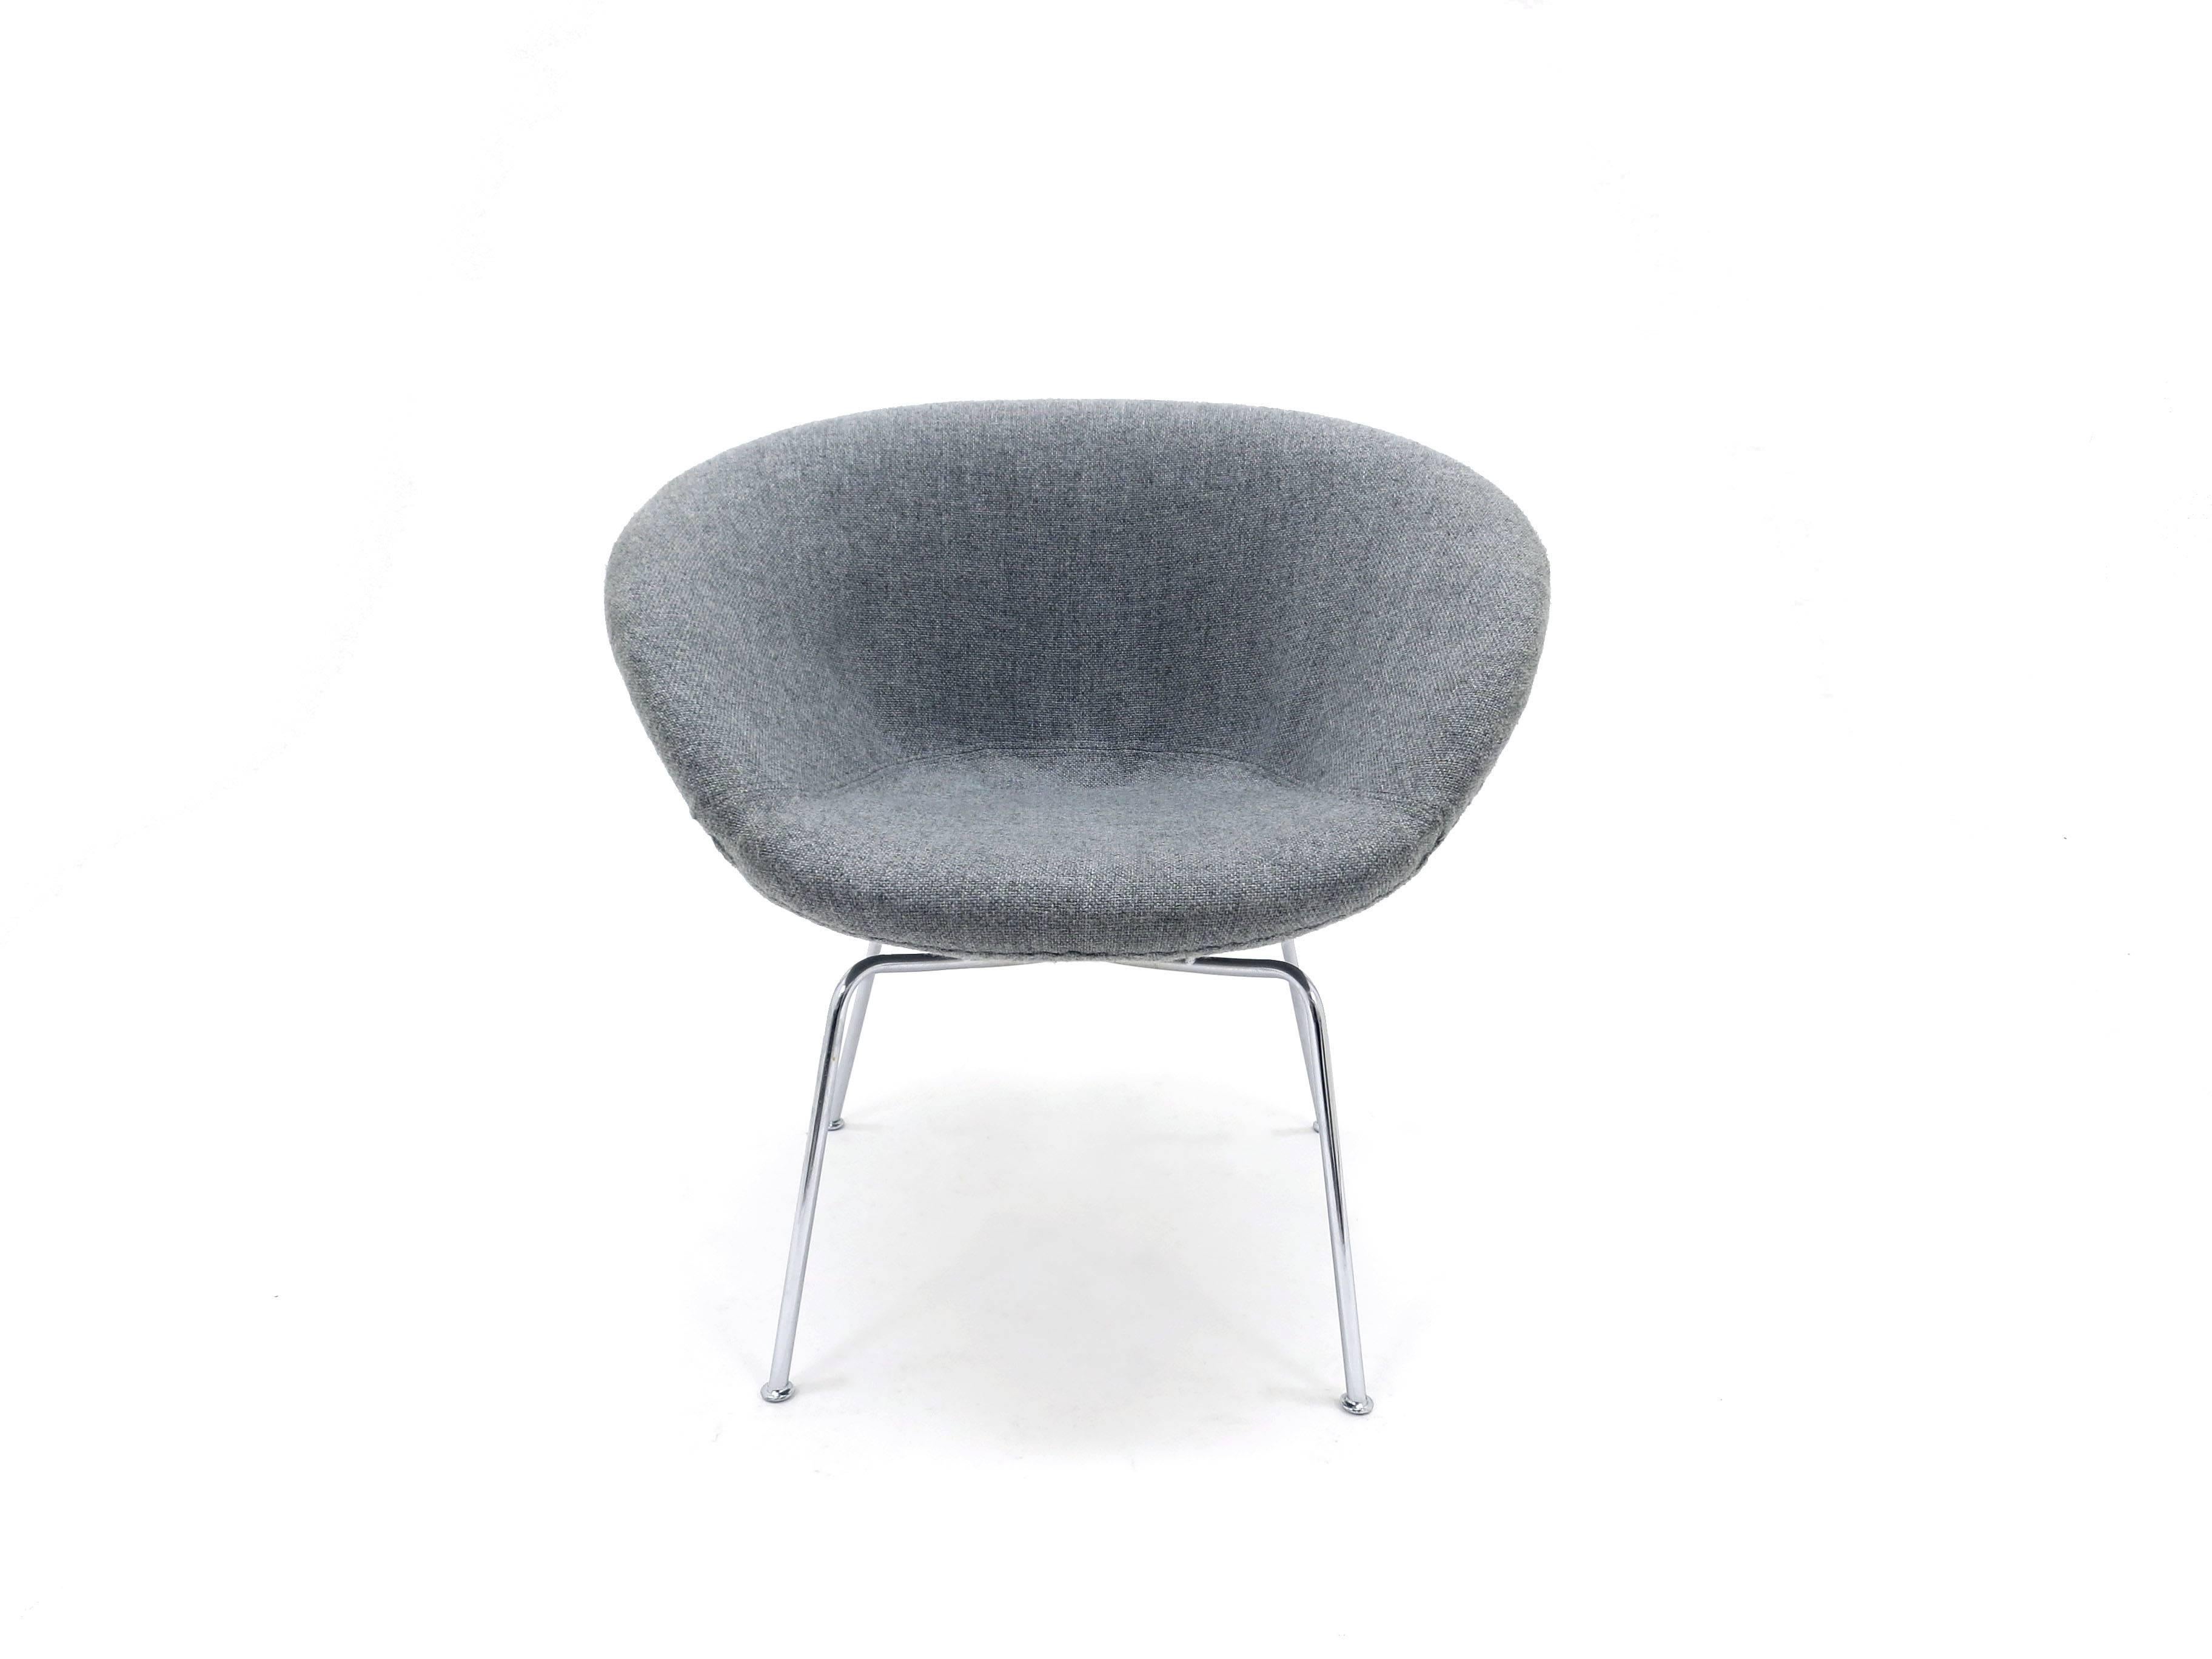 Arne Jacobsen Pot Chair for Fritz Hansen, Danish, 1950s In Excellent Condition For Sale In London, GB